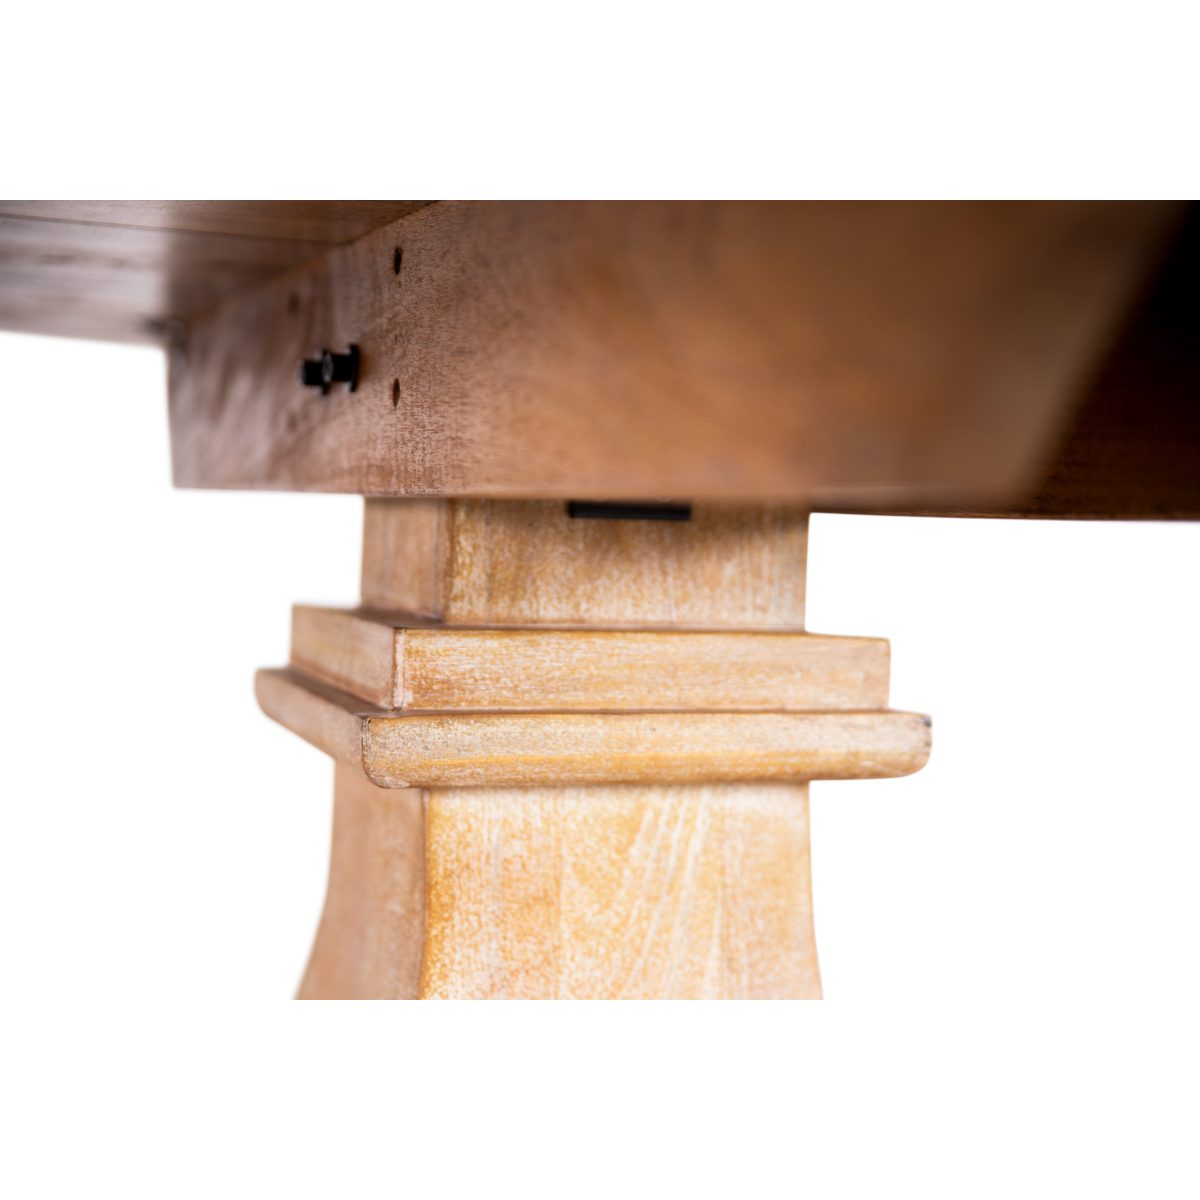 Gloriosa Round Dining Table 135cm Pedestal Solid Mango Timber Wood – Honey Wash